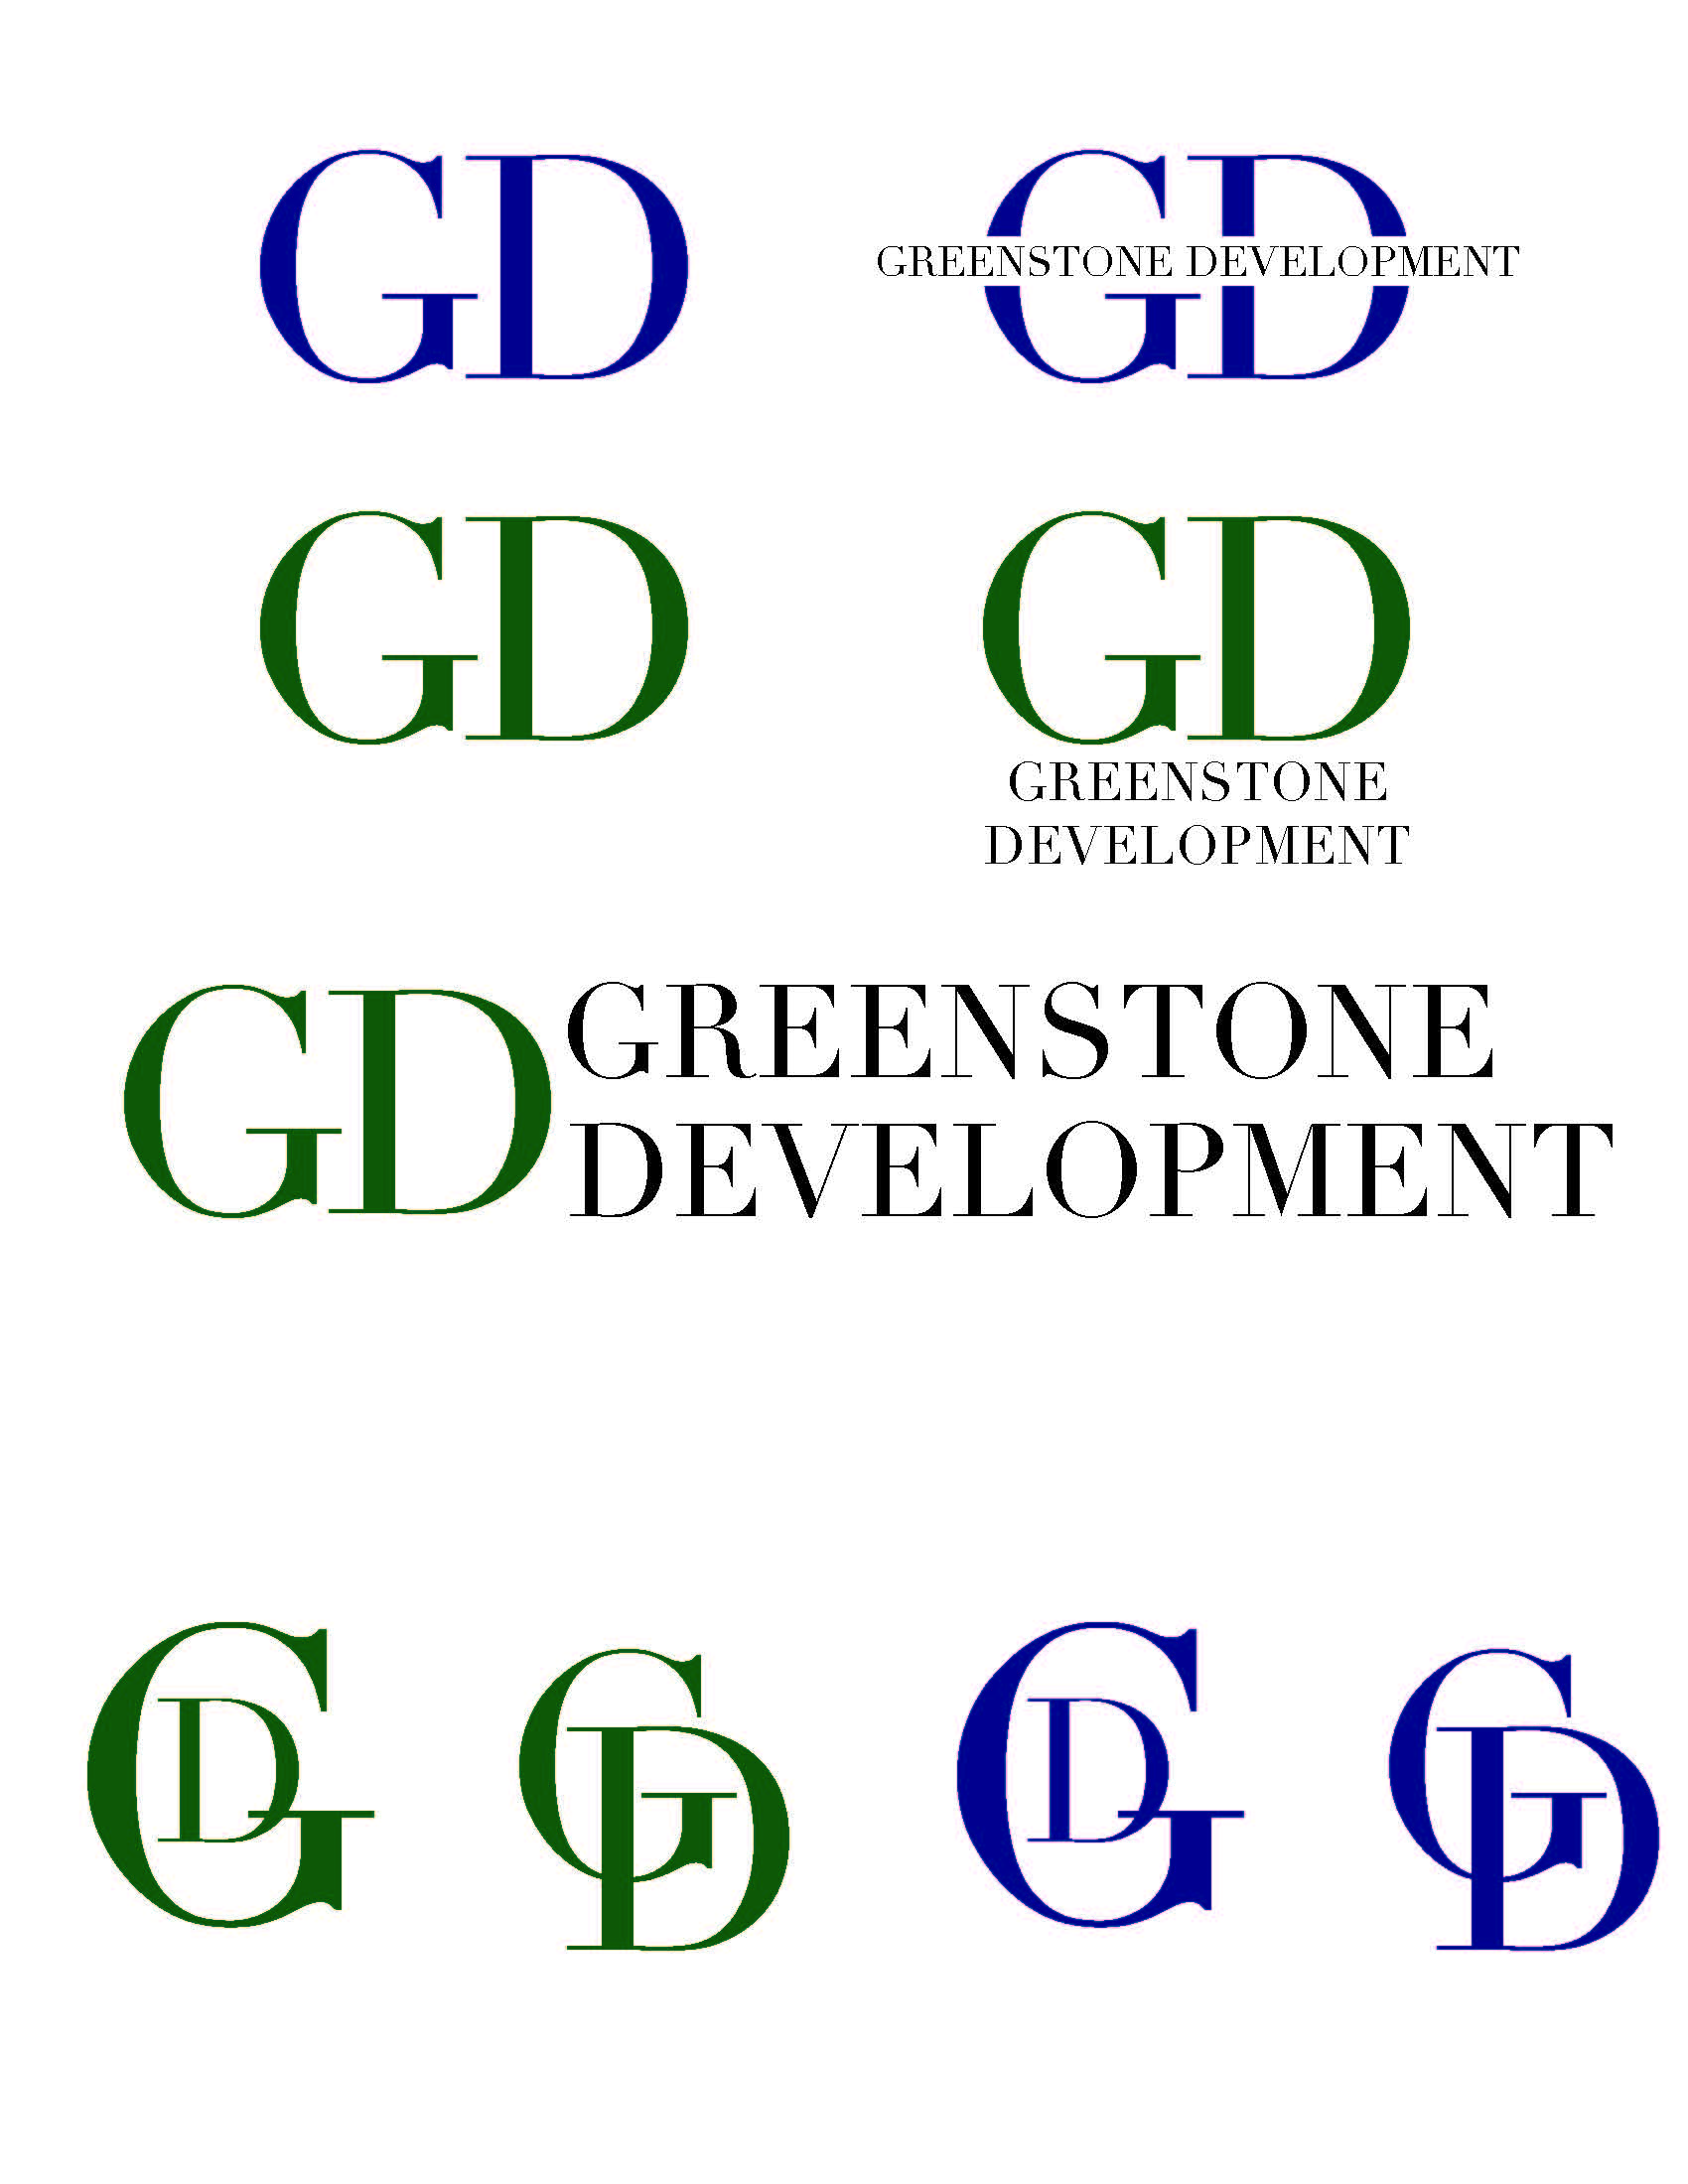 greenstone_development_Page_1.jpg